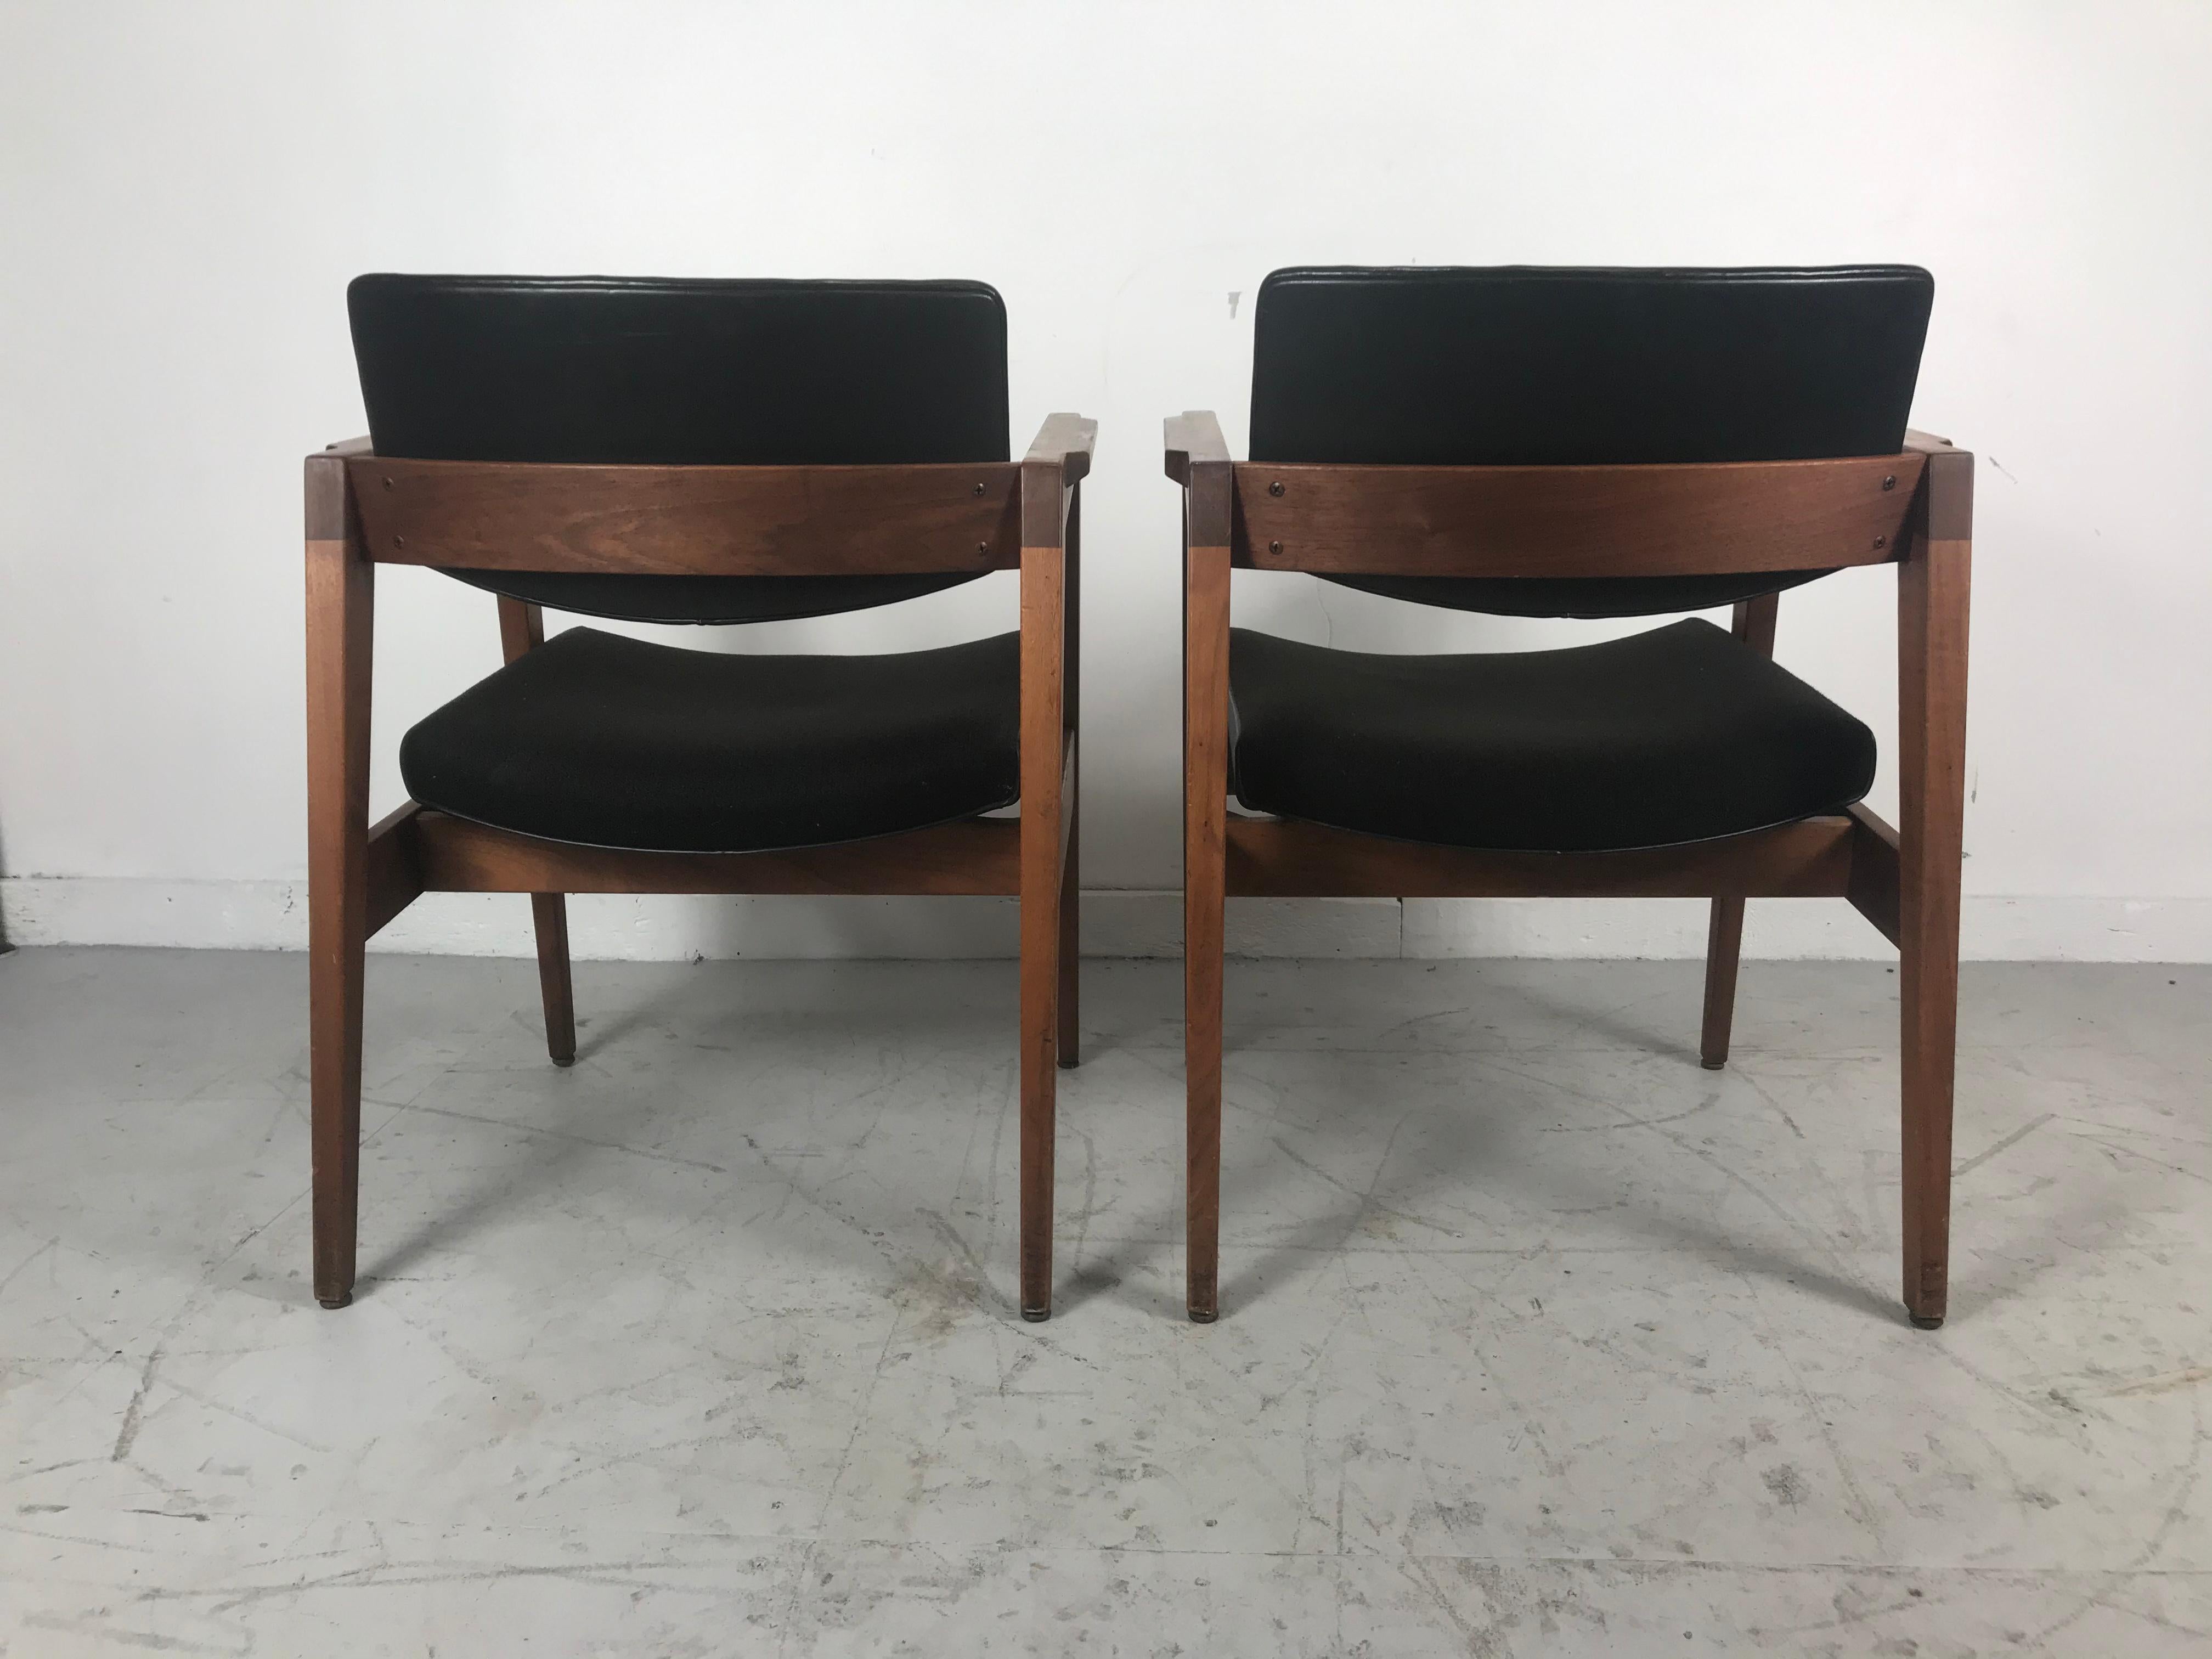 American Classic Mid-Century Modern Lounge Chairs, Walnut Frames, by Gunlocke, Jens Risom